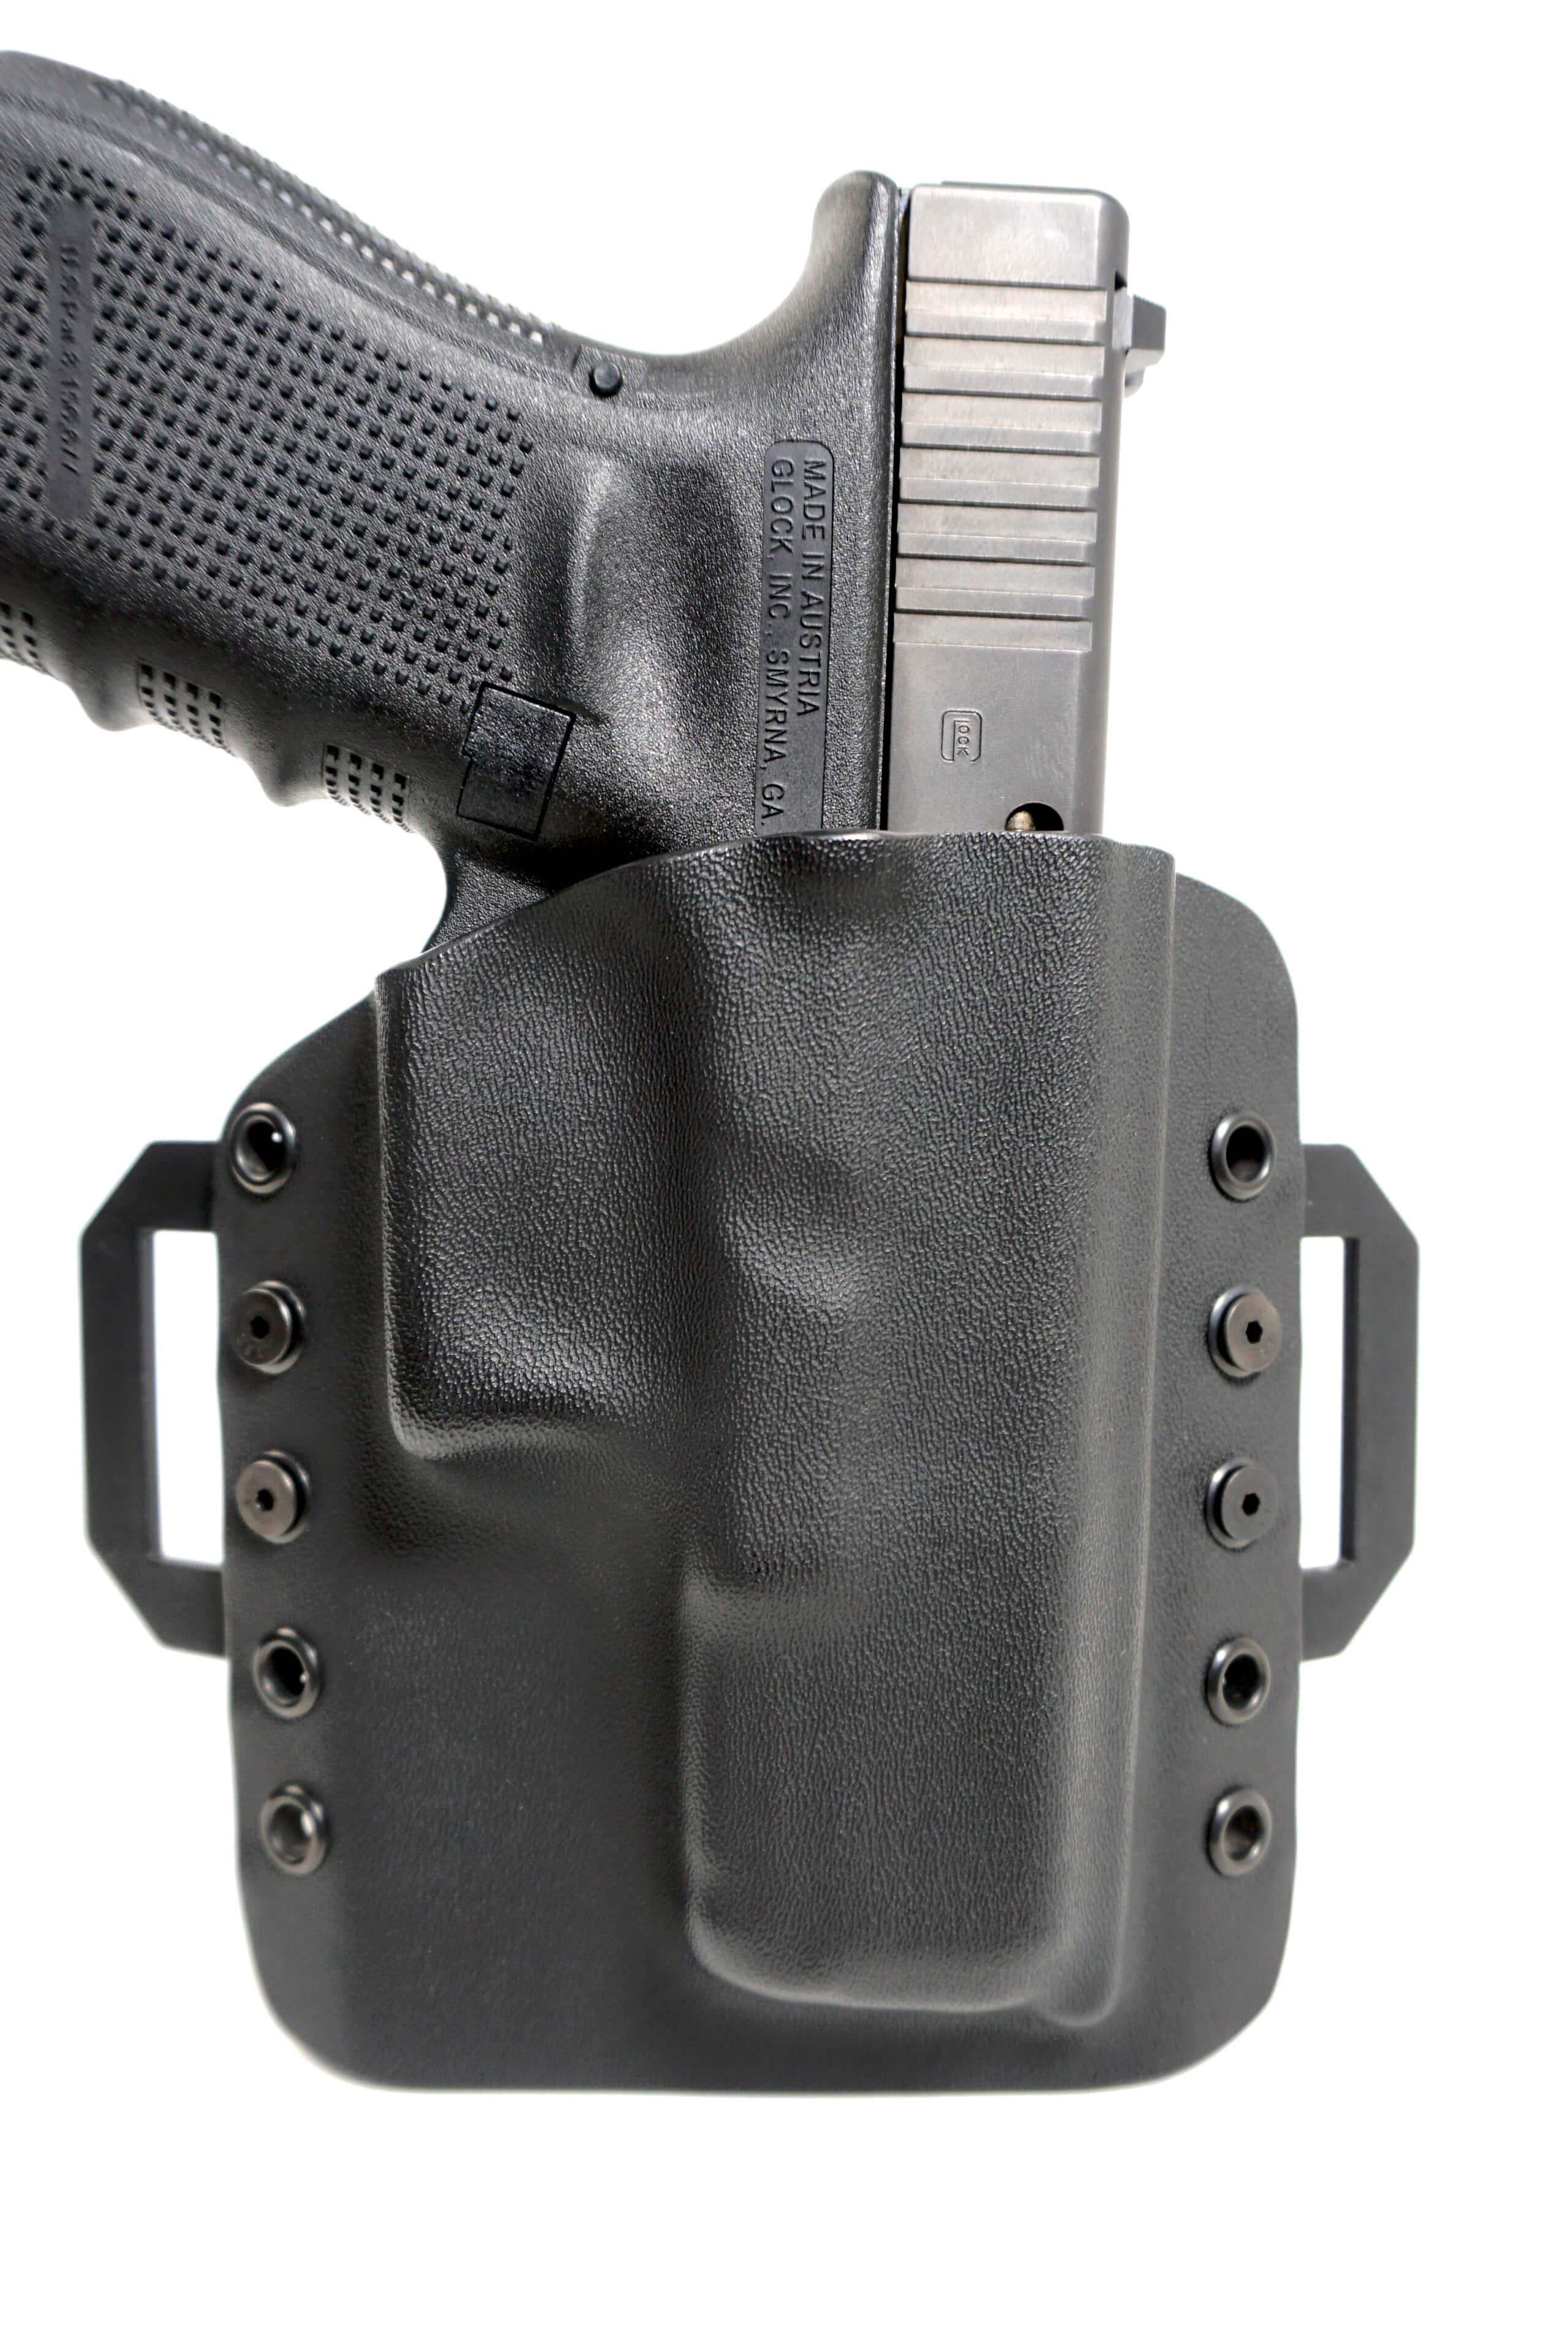 Black Scorpion Kydex IWB Gun Holster For Smith & Wesson S&W M&P 22 Carbon Fiber 